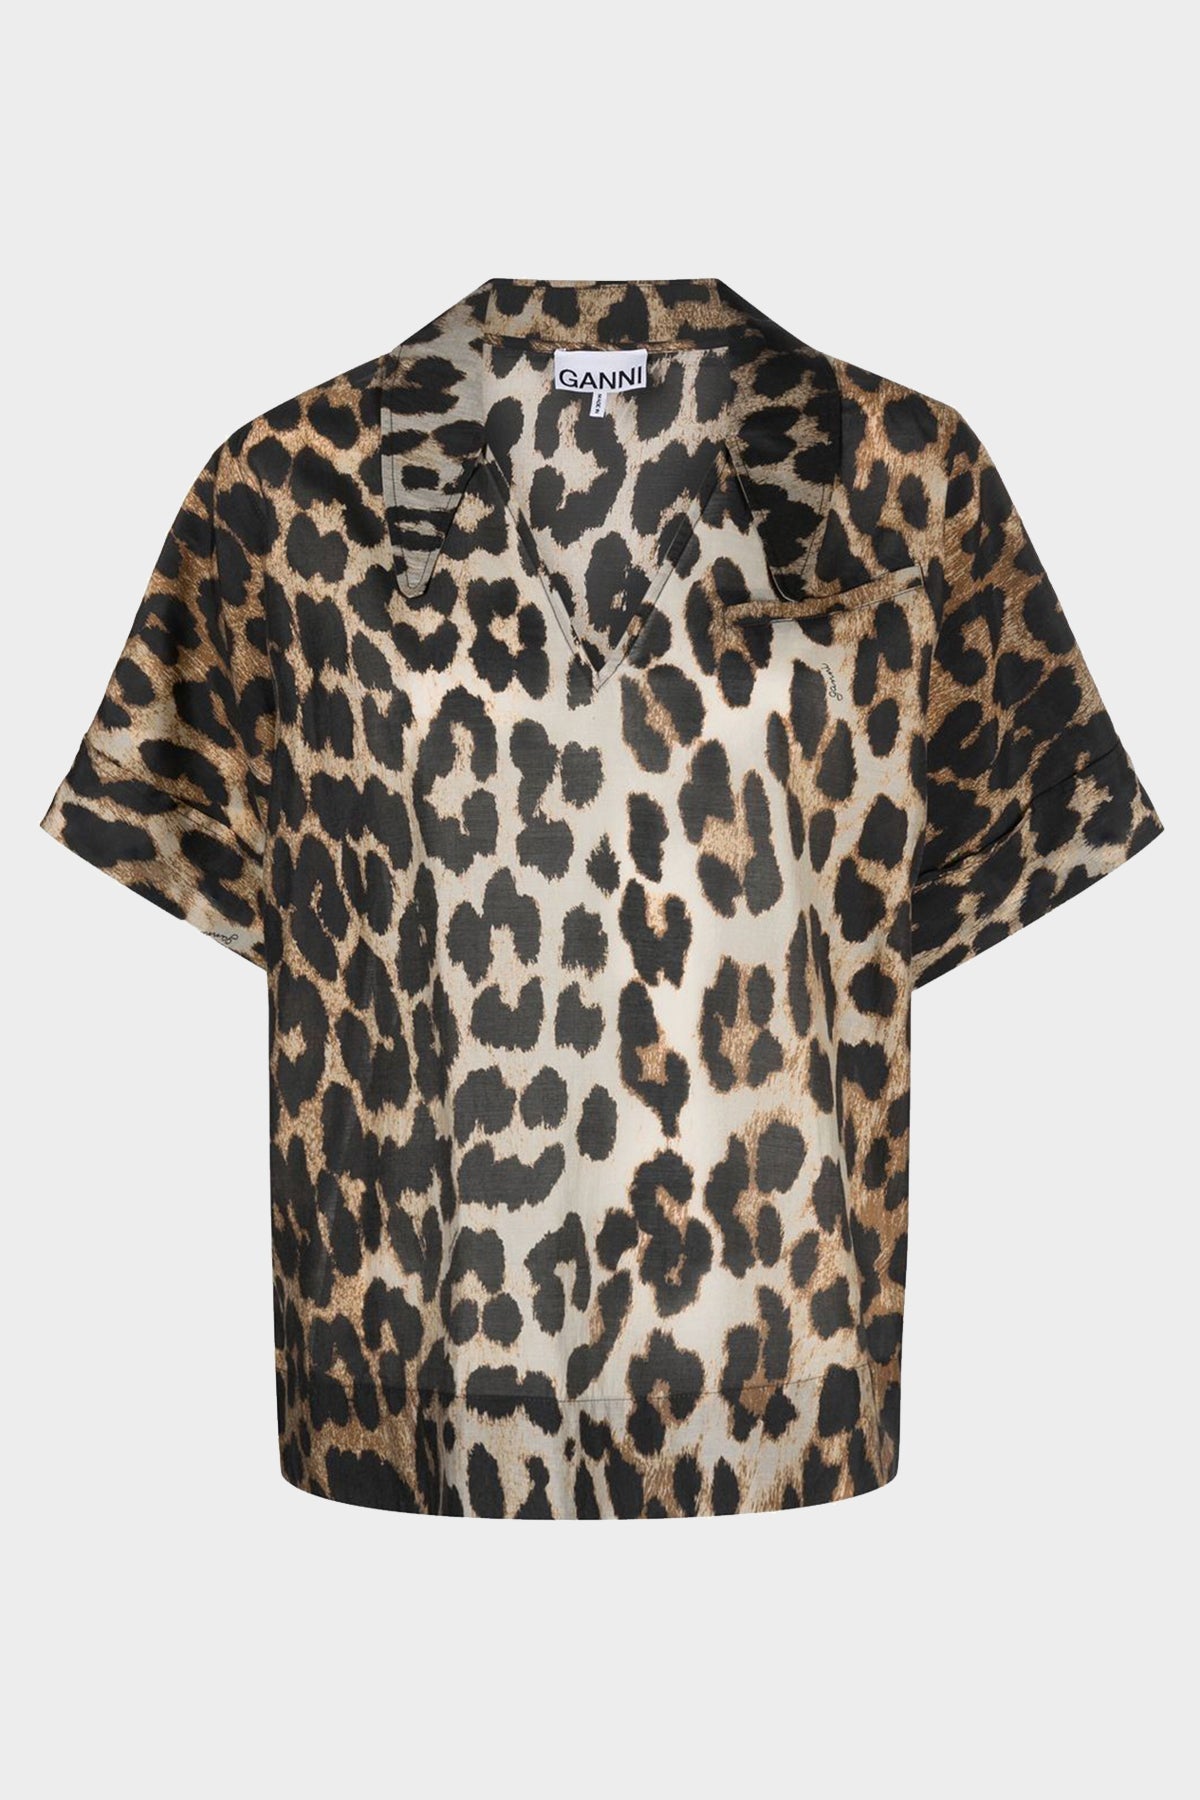 Sheer Voile Shirt in Maxi Leopard - shop-olivia.com